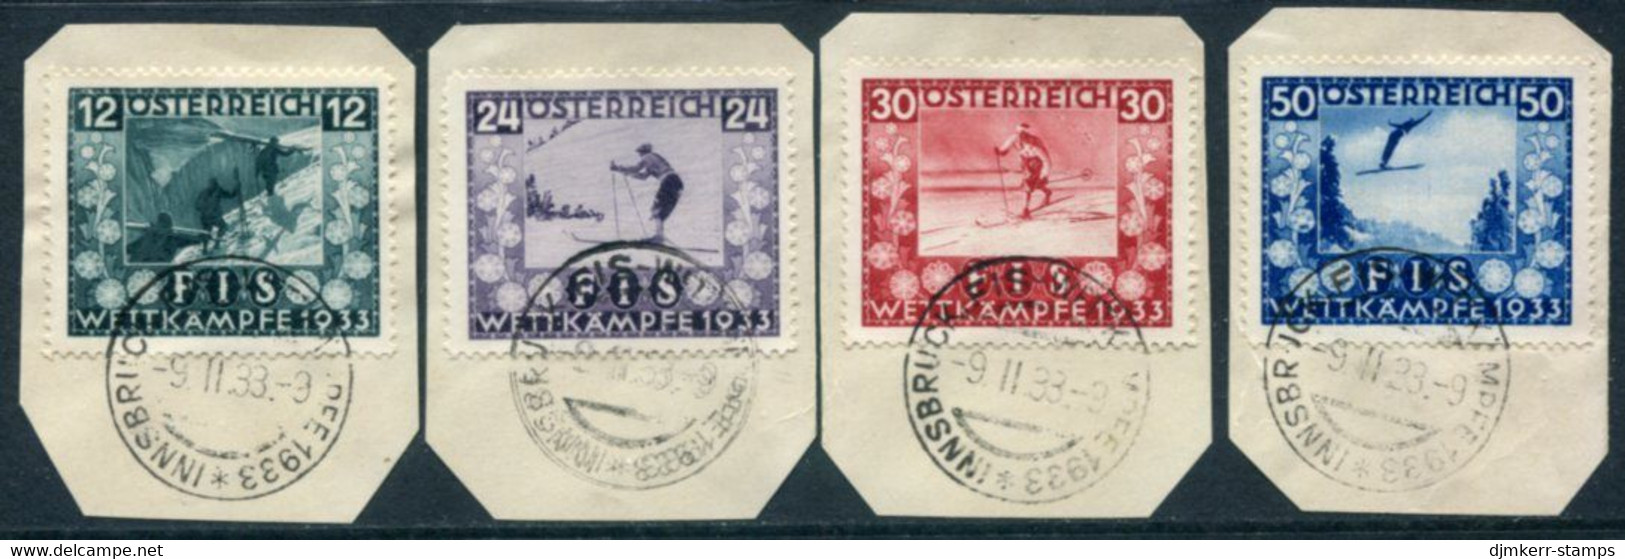 AUSTRIA 1933 Ski Championship Fund Used On Pieces.  Michel 551-54 - Usati